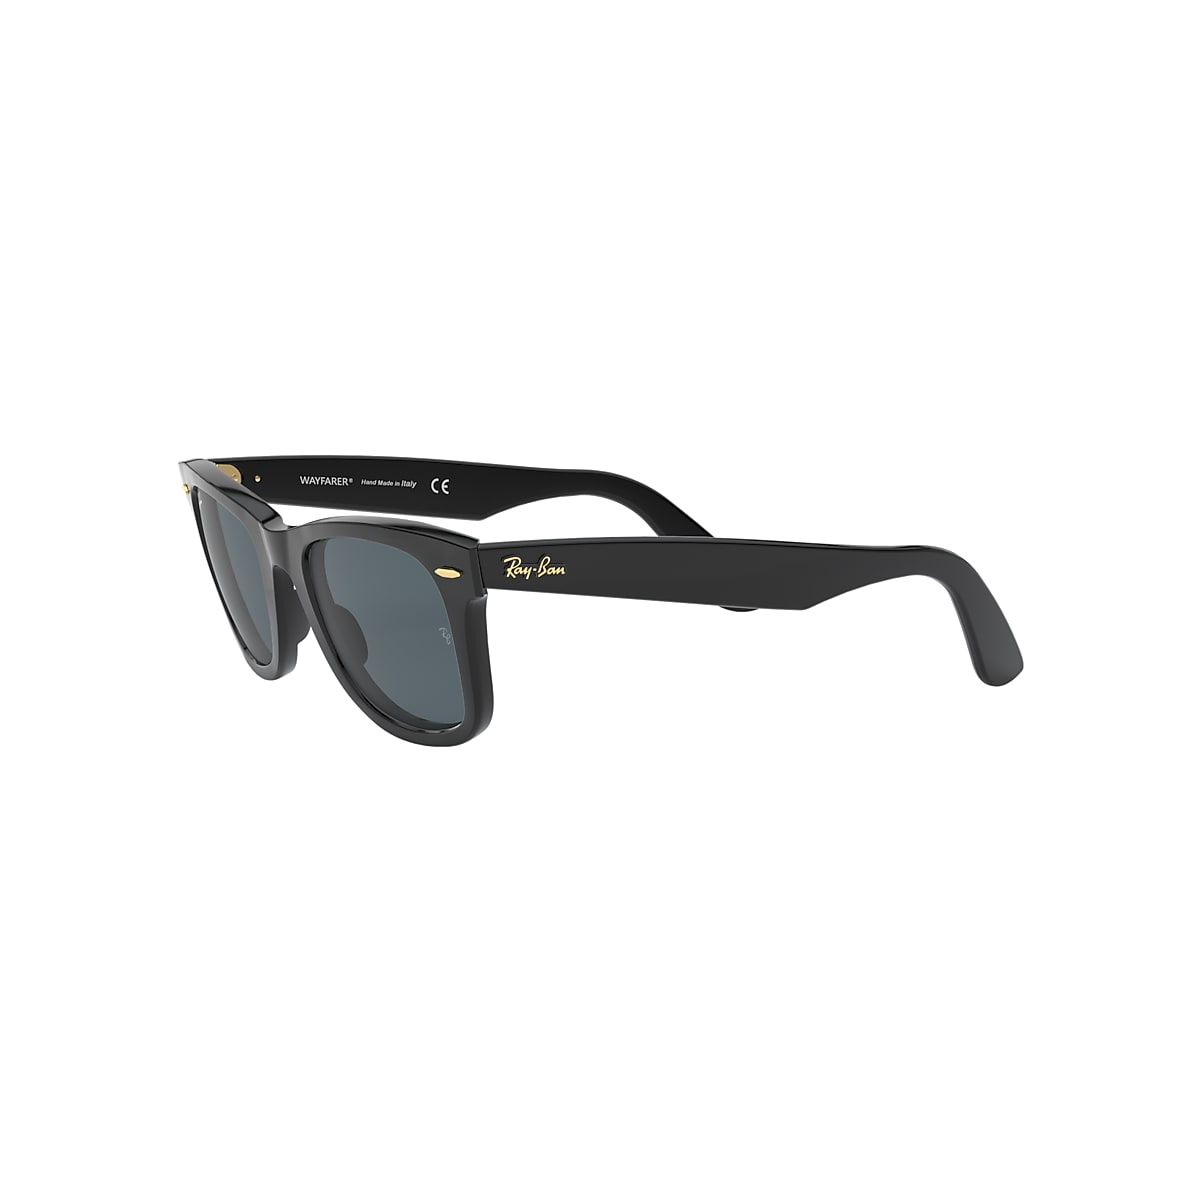 ORIGINAL @COLLECTION Sunglasses Black Blue/Grey - RB2140 | Ray-Ban® US